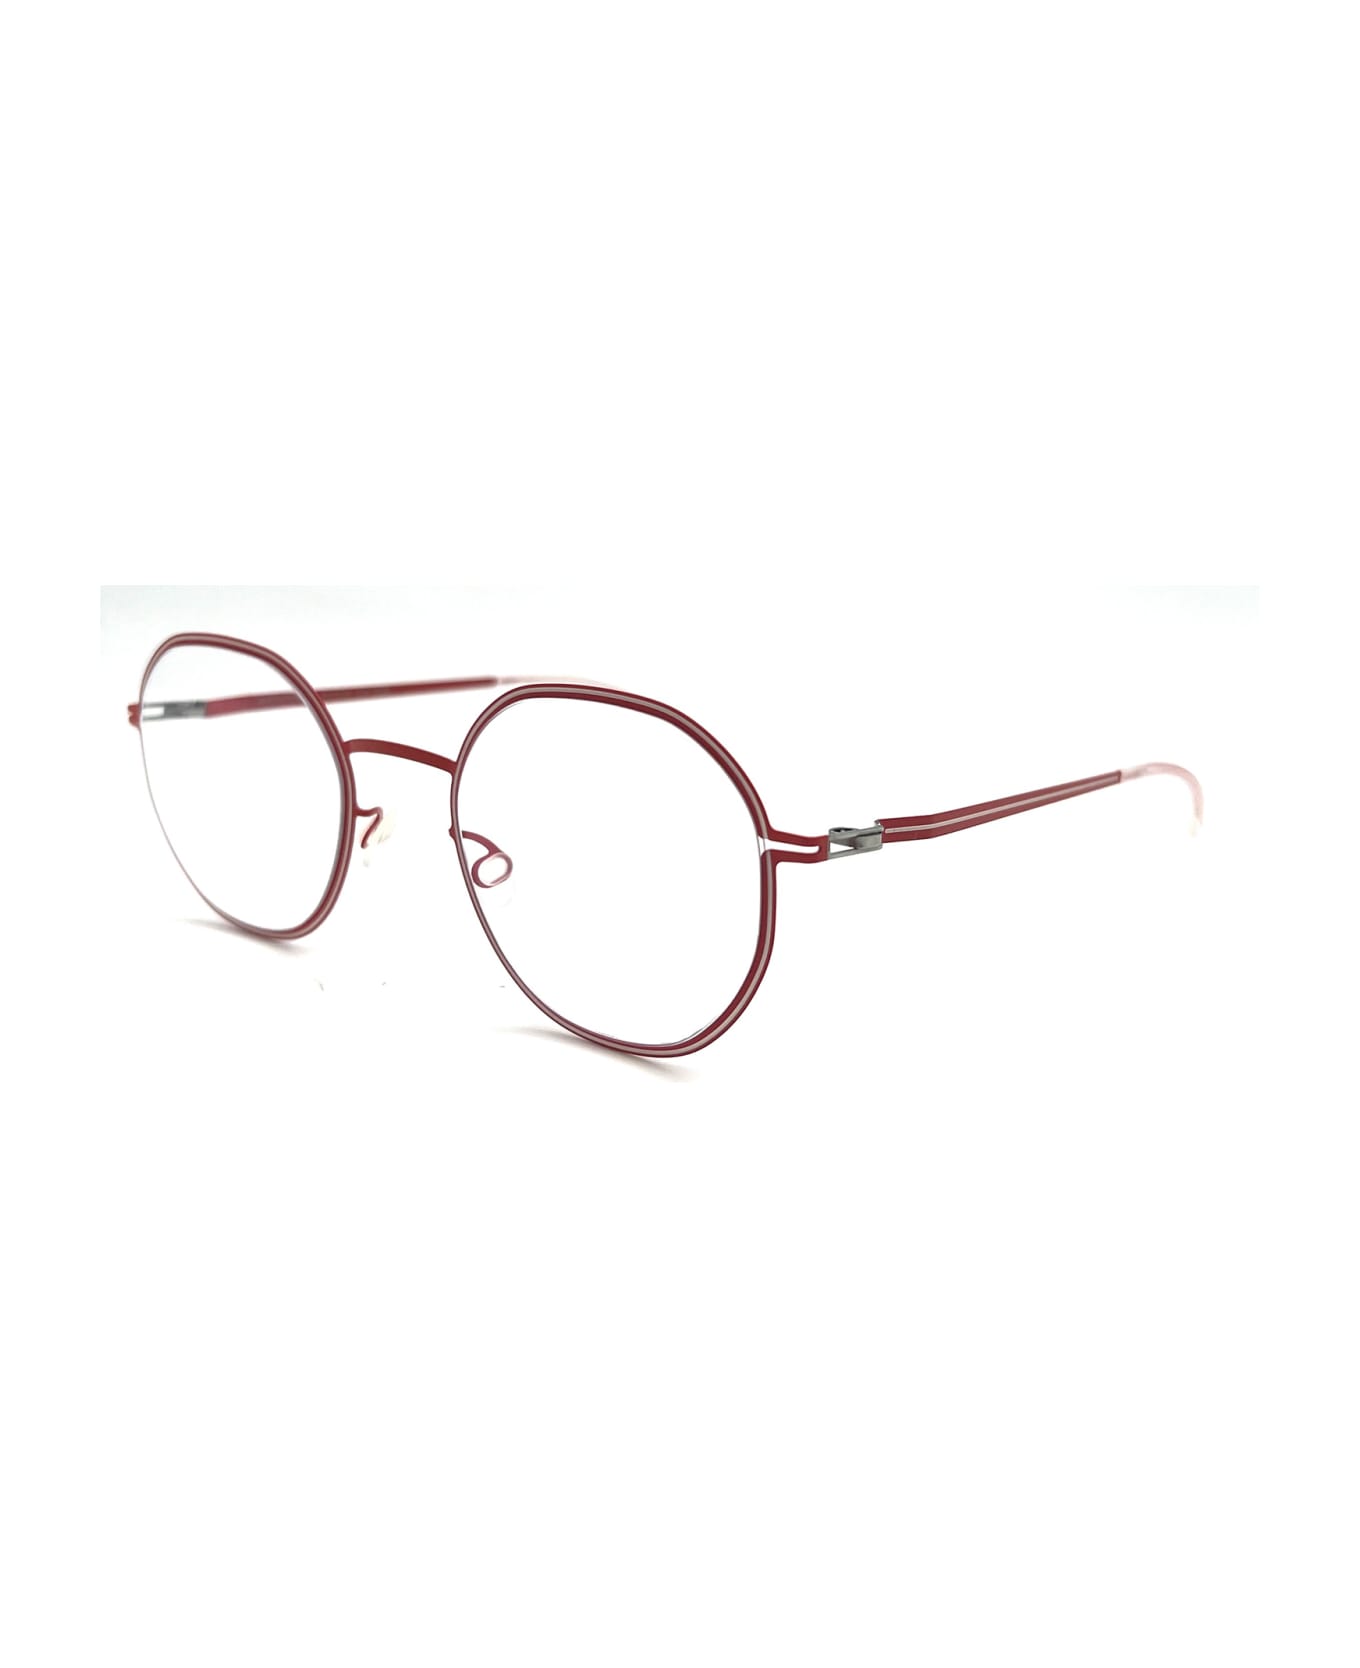 Mykita STUDIO 6.6 Eyewear - Rusty Red/aurore アイウェア